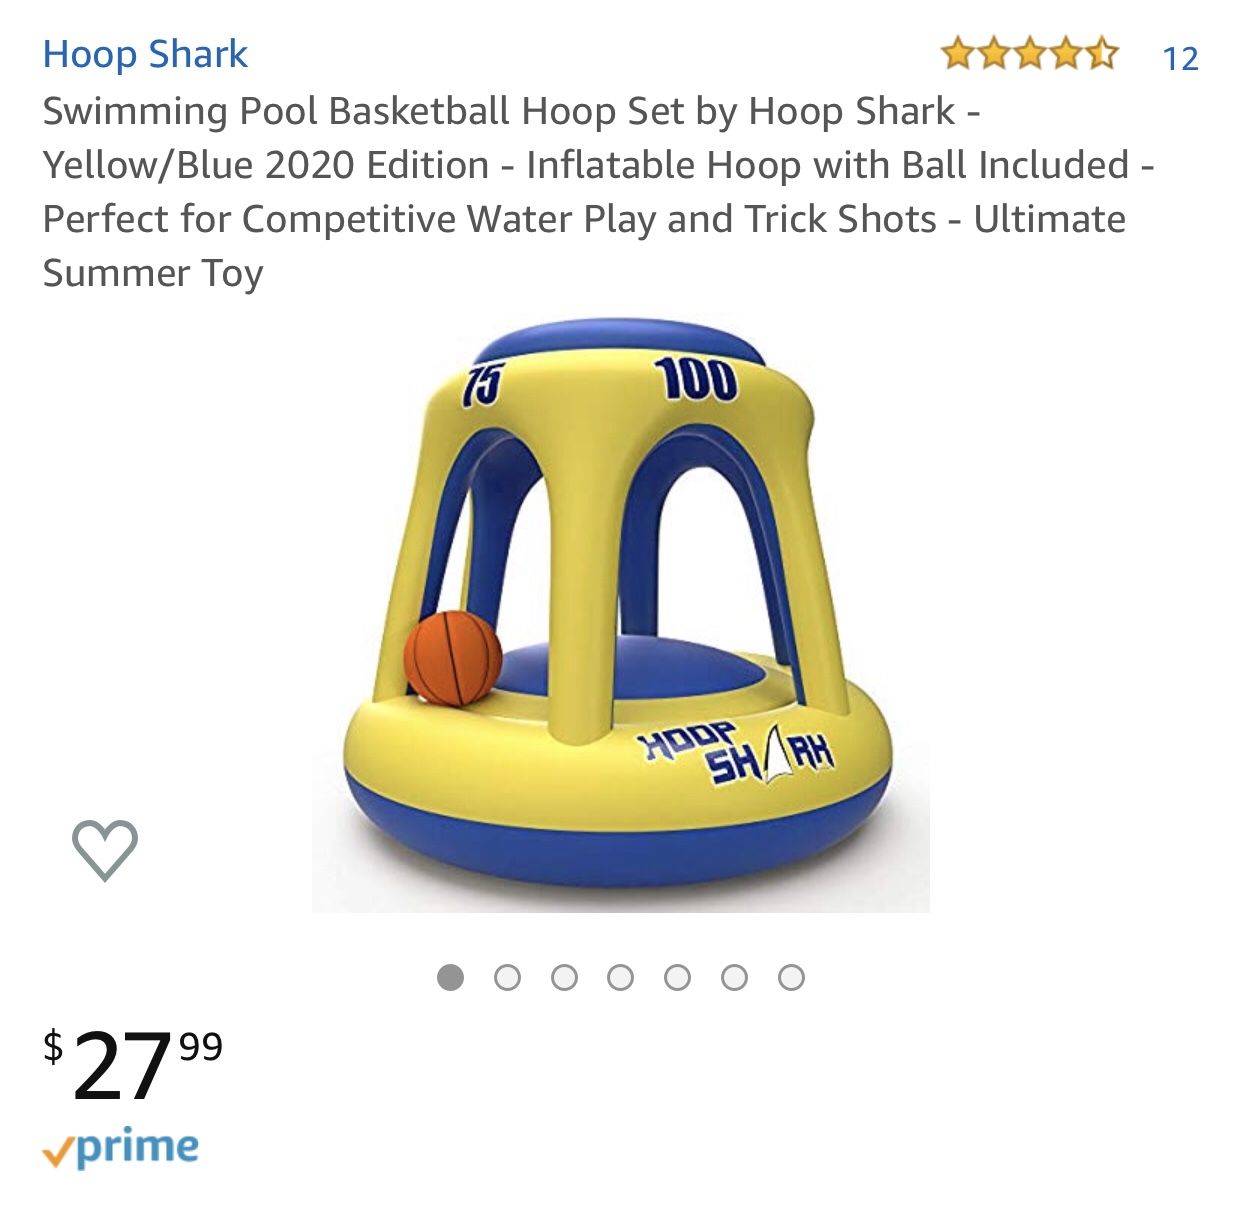 New Basketball Hoop Set for POOL FUN !